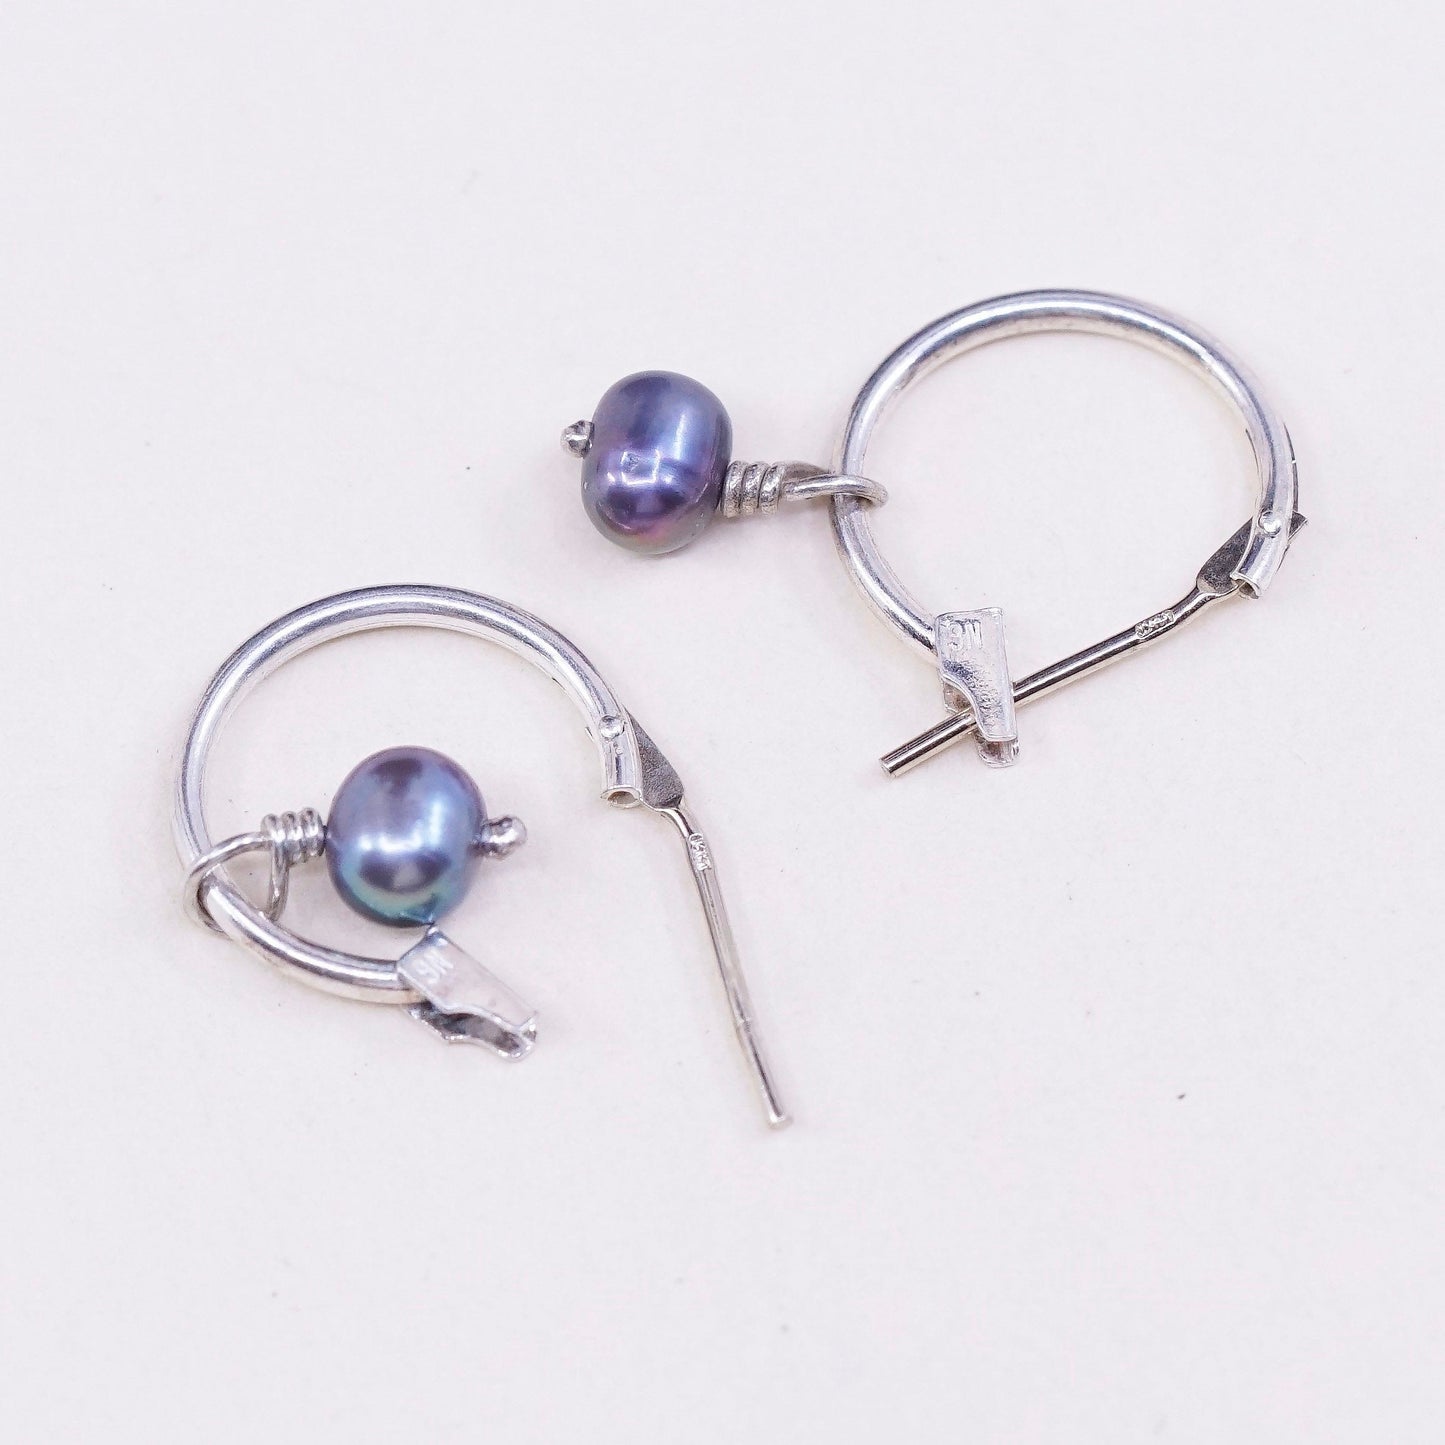 0.5”, vtg sterling 925 silver earrings, minimalist primitive hoops with pearl